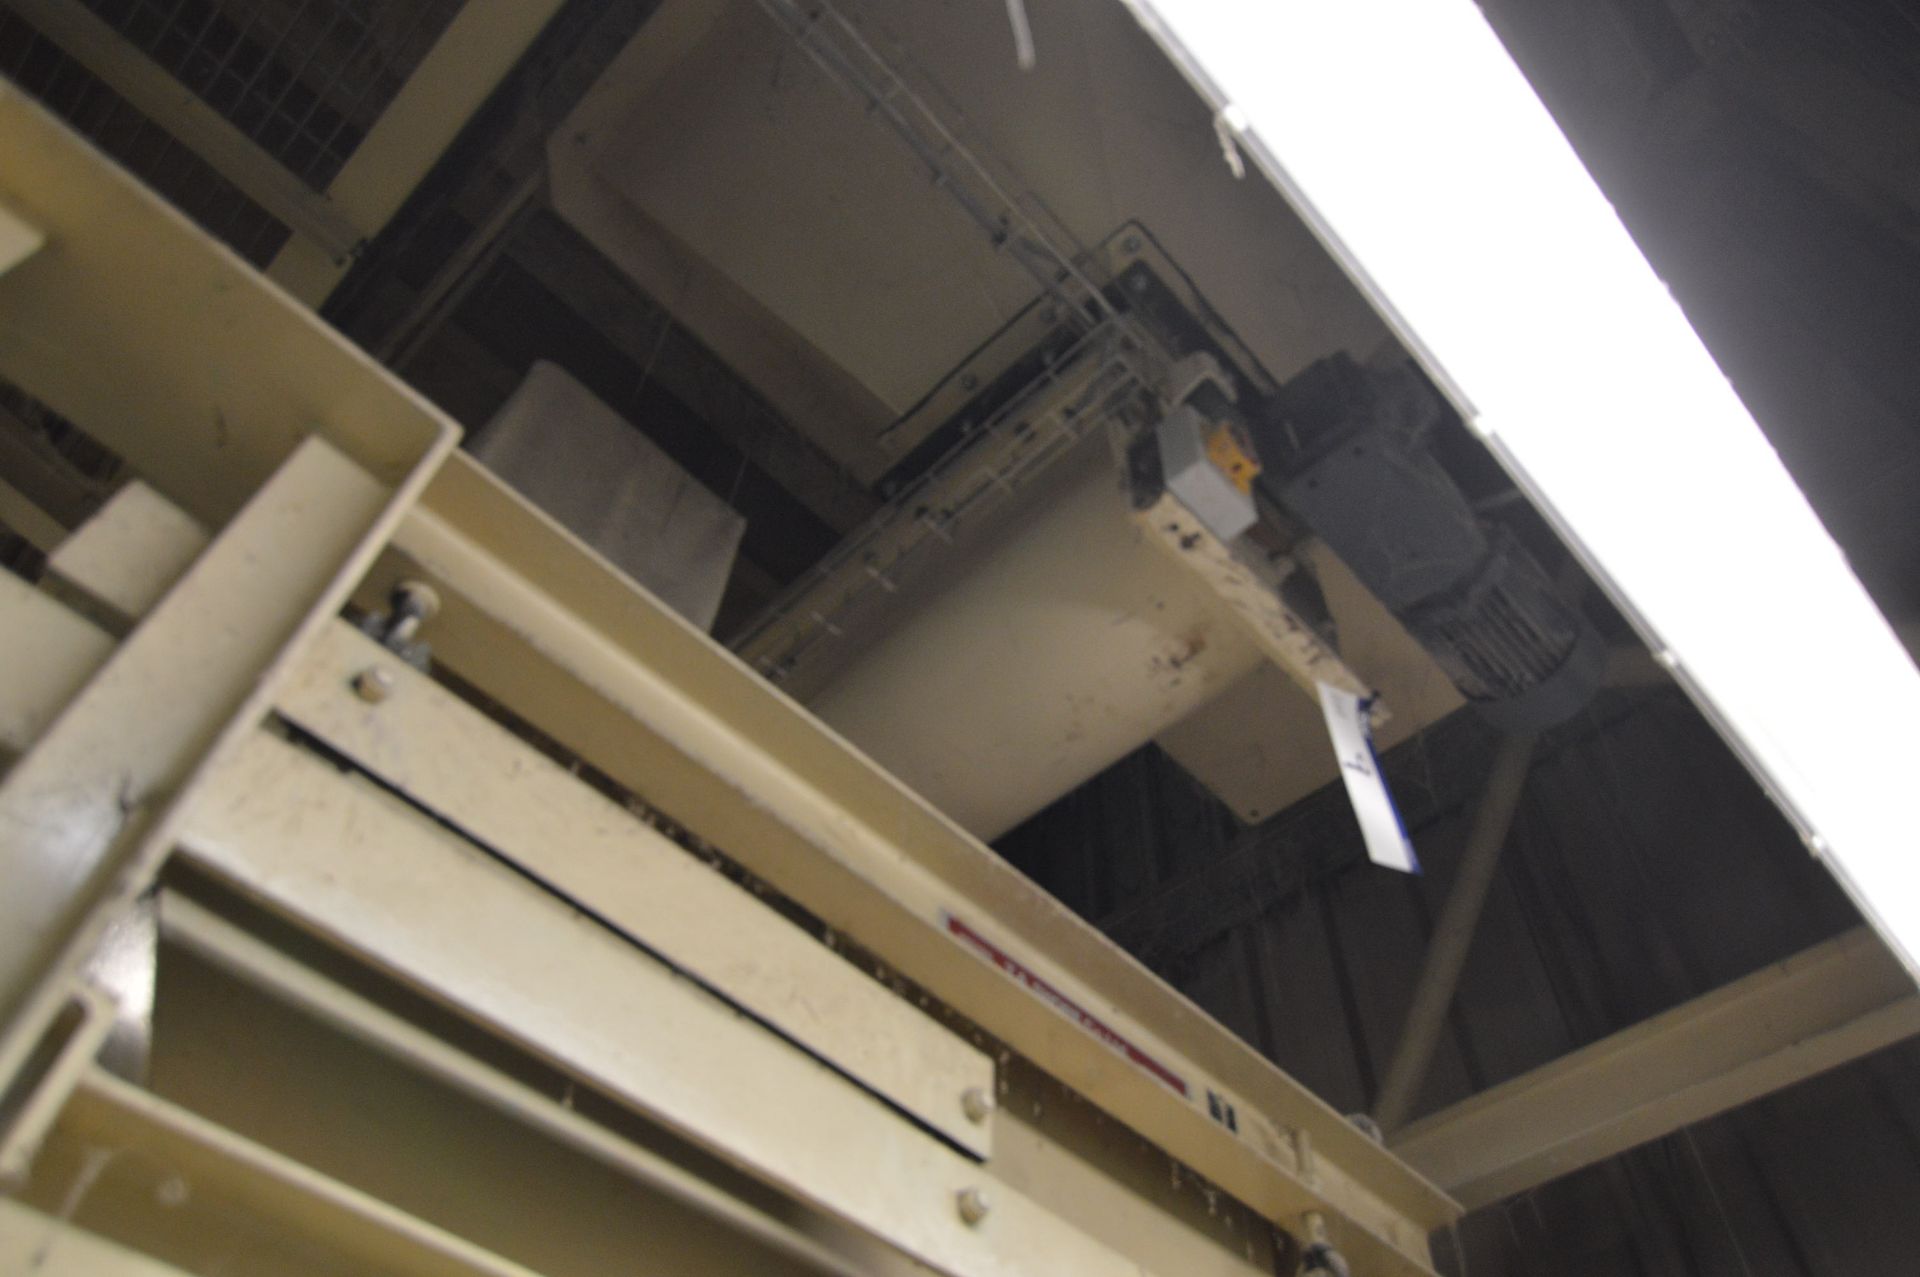 Guttridge 300mm dia. Screw Conveyor, serial no. 0570616-2-1 C6, 1.3m long, year of manufacture 2011, - Bild 2 aus 2